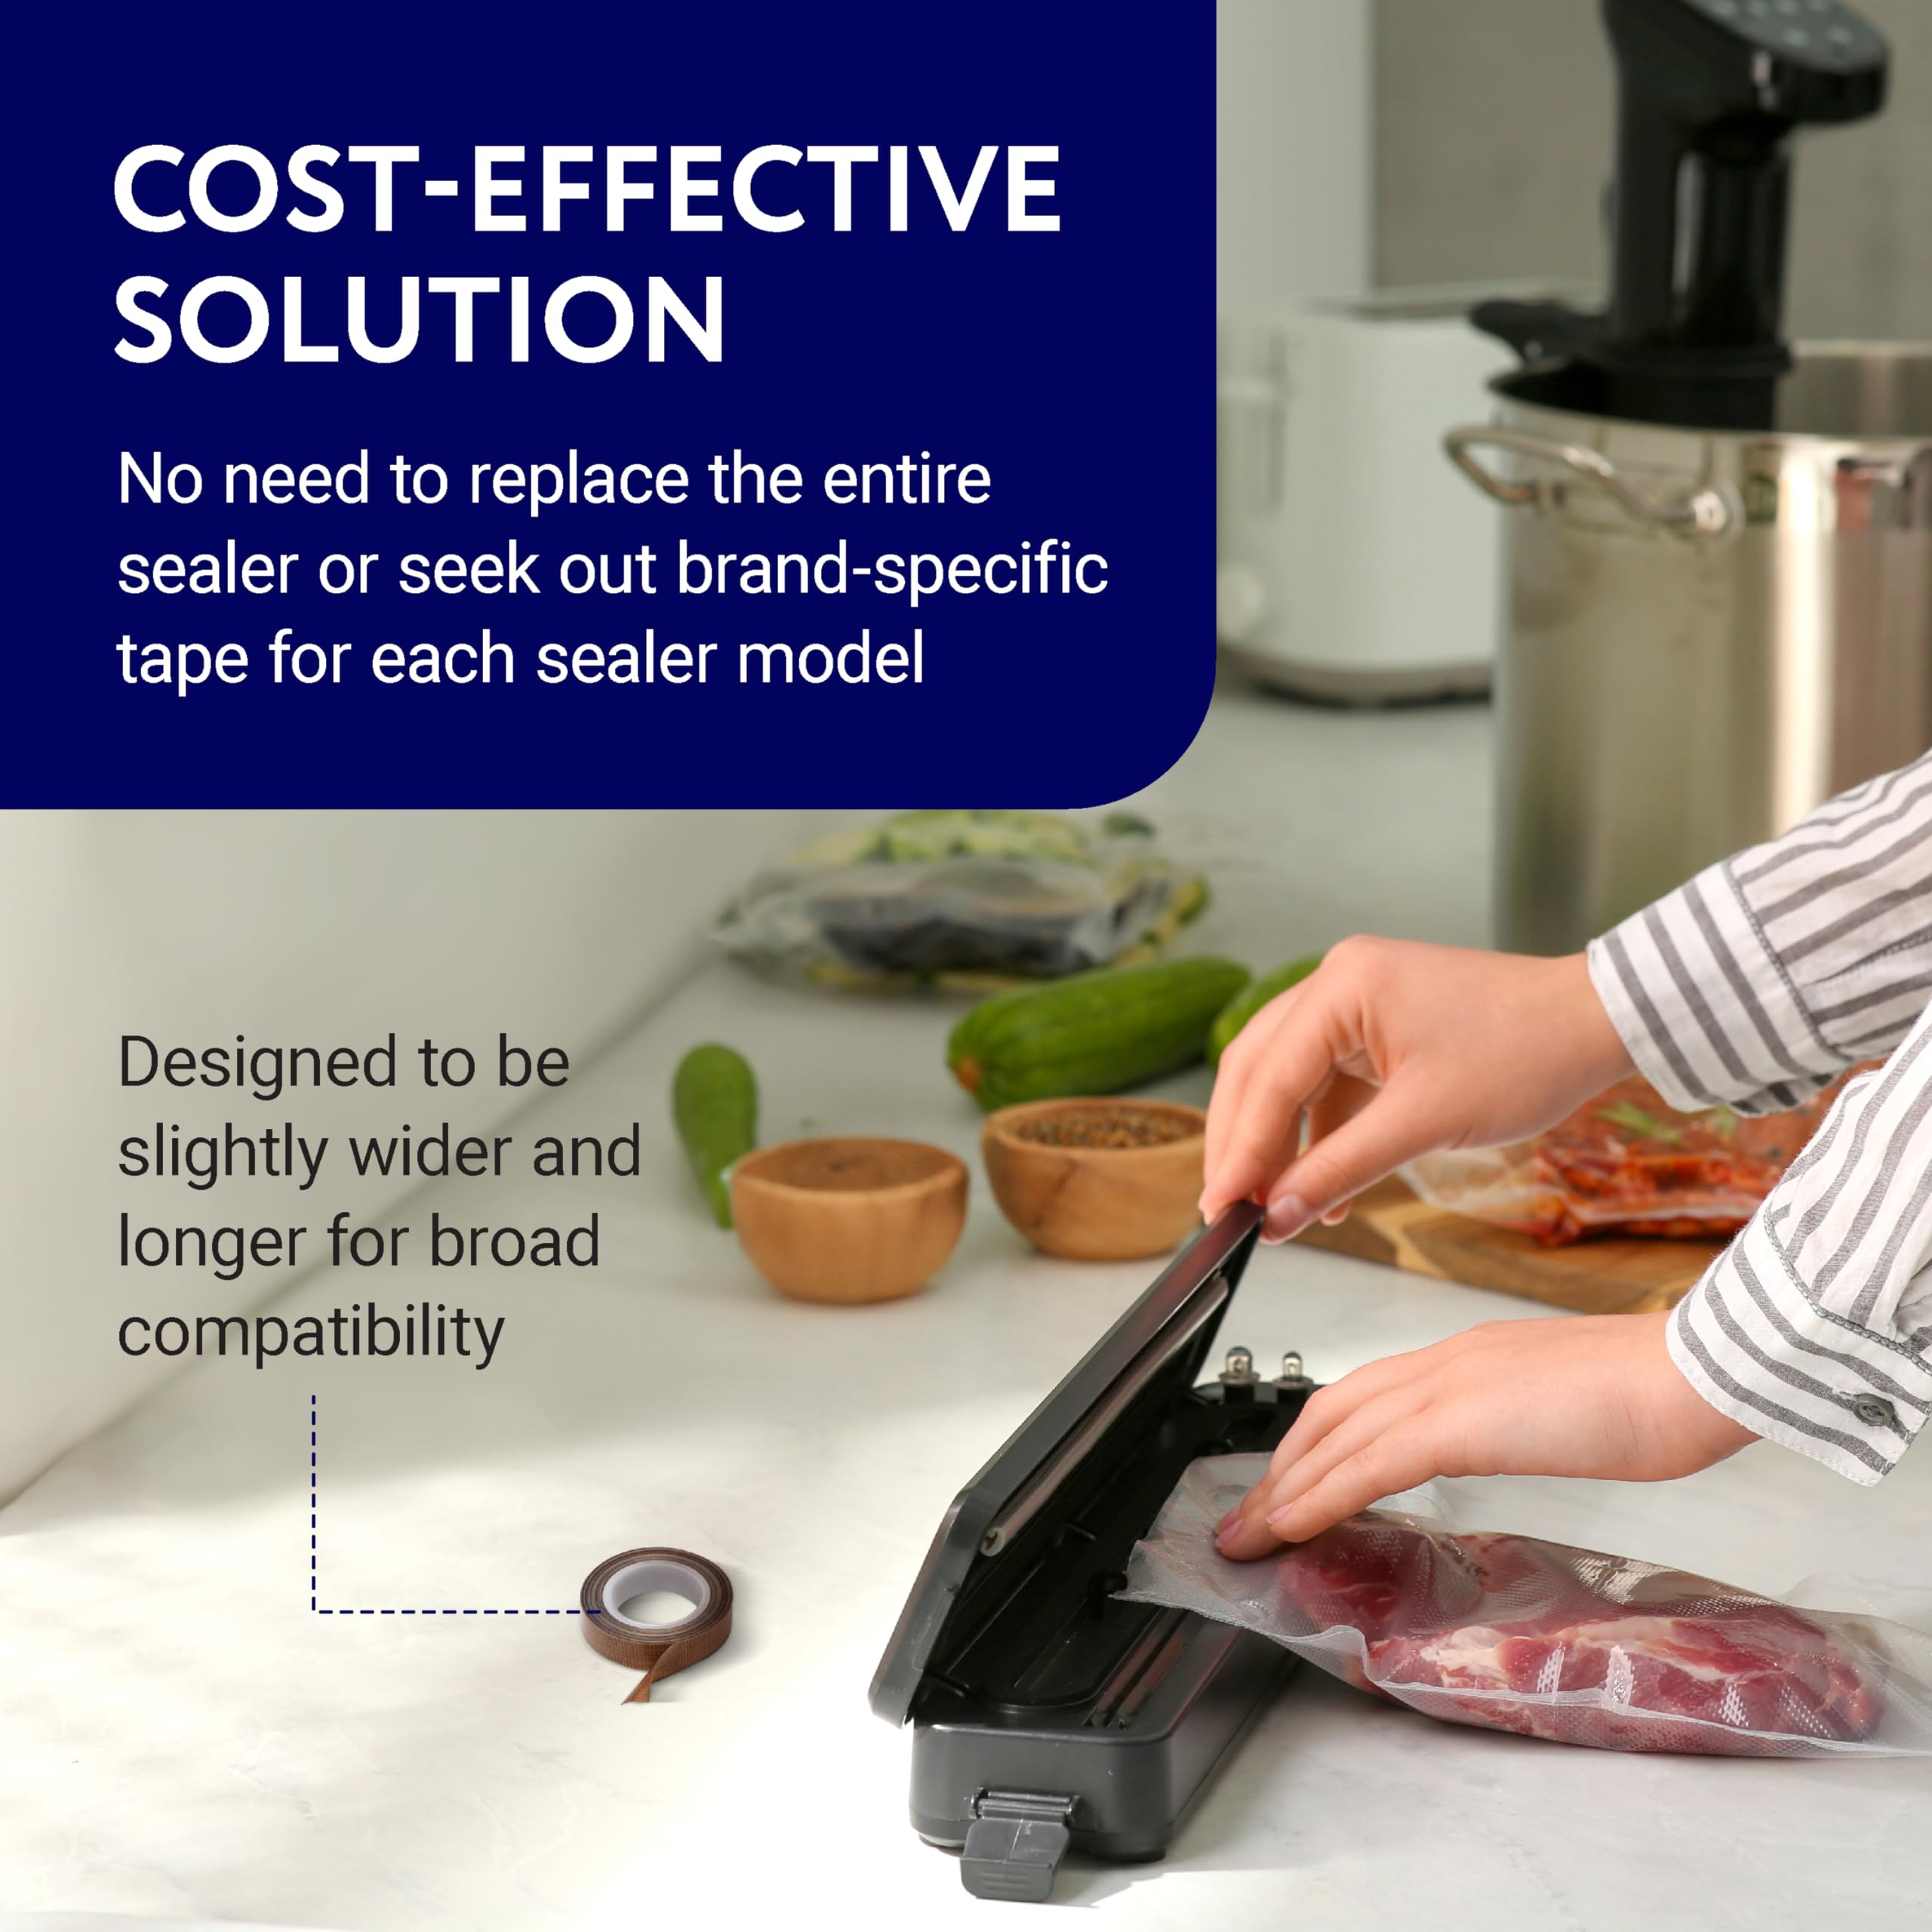 IMPRESA PTFE Tape/Teflon Tape for Vacuum, Hand and Impulse Sealers (1/2-inch x 30 feet) - Fits FoodSaver, Seal A Meal, Weston, Cabella's